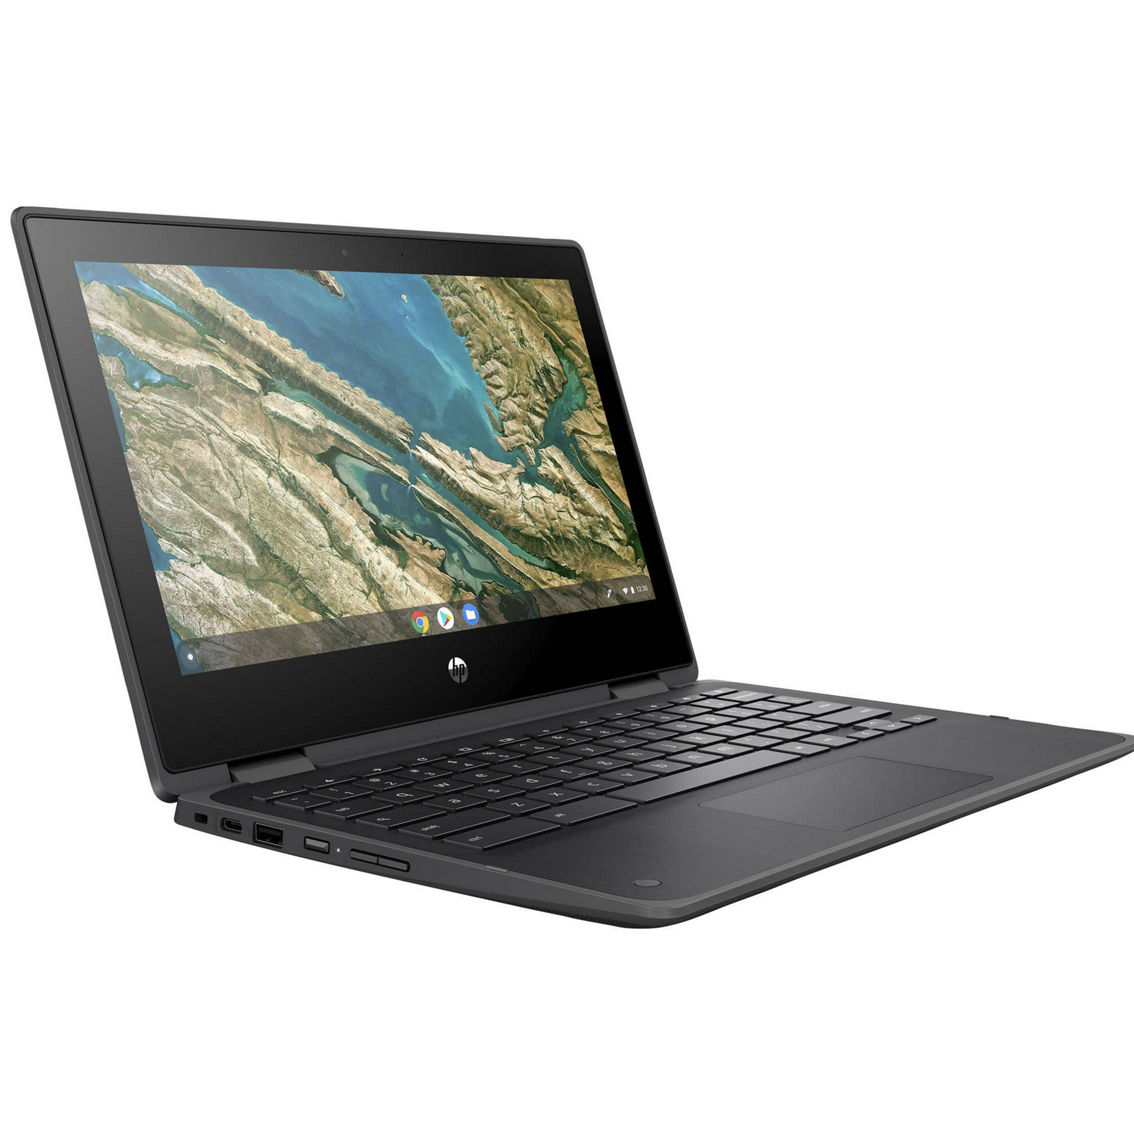 HP Chromebook X360 11 G3 Celeron N4020 1.1GHz 4GB 32GB SSD Laptop (Refurbished) - Image 3 of 4